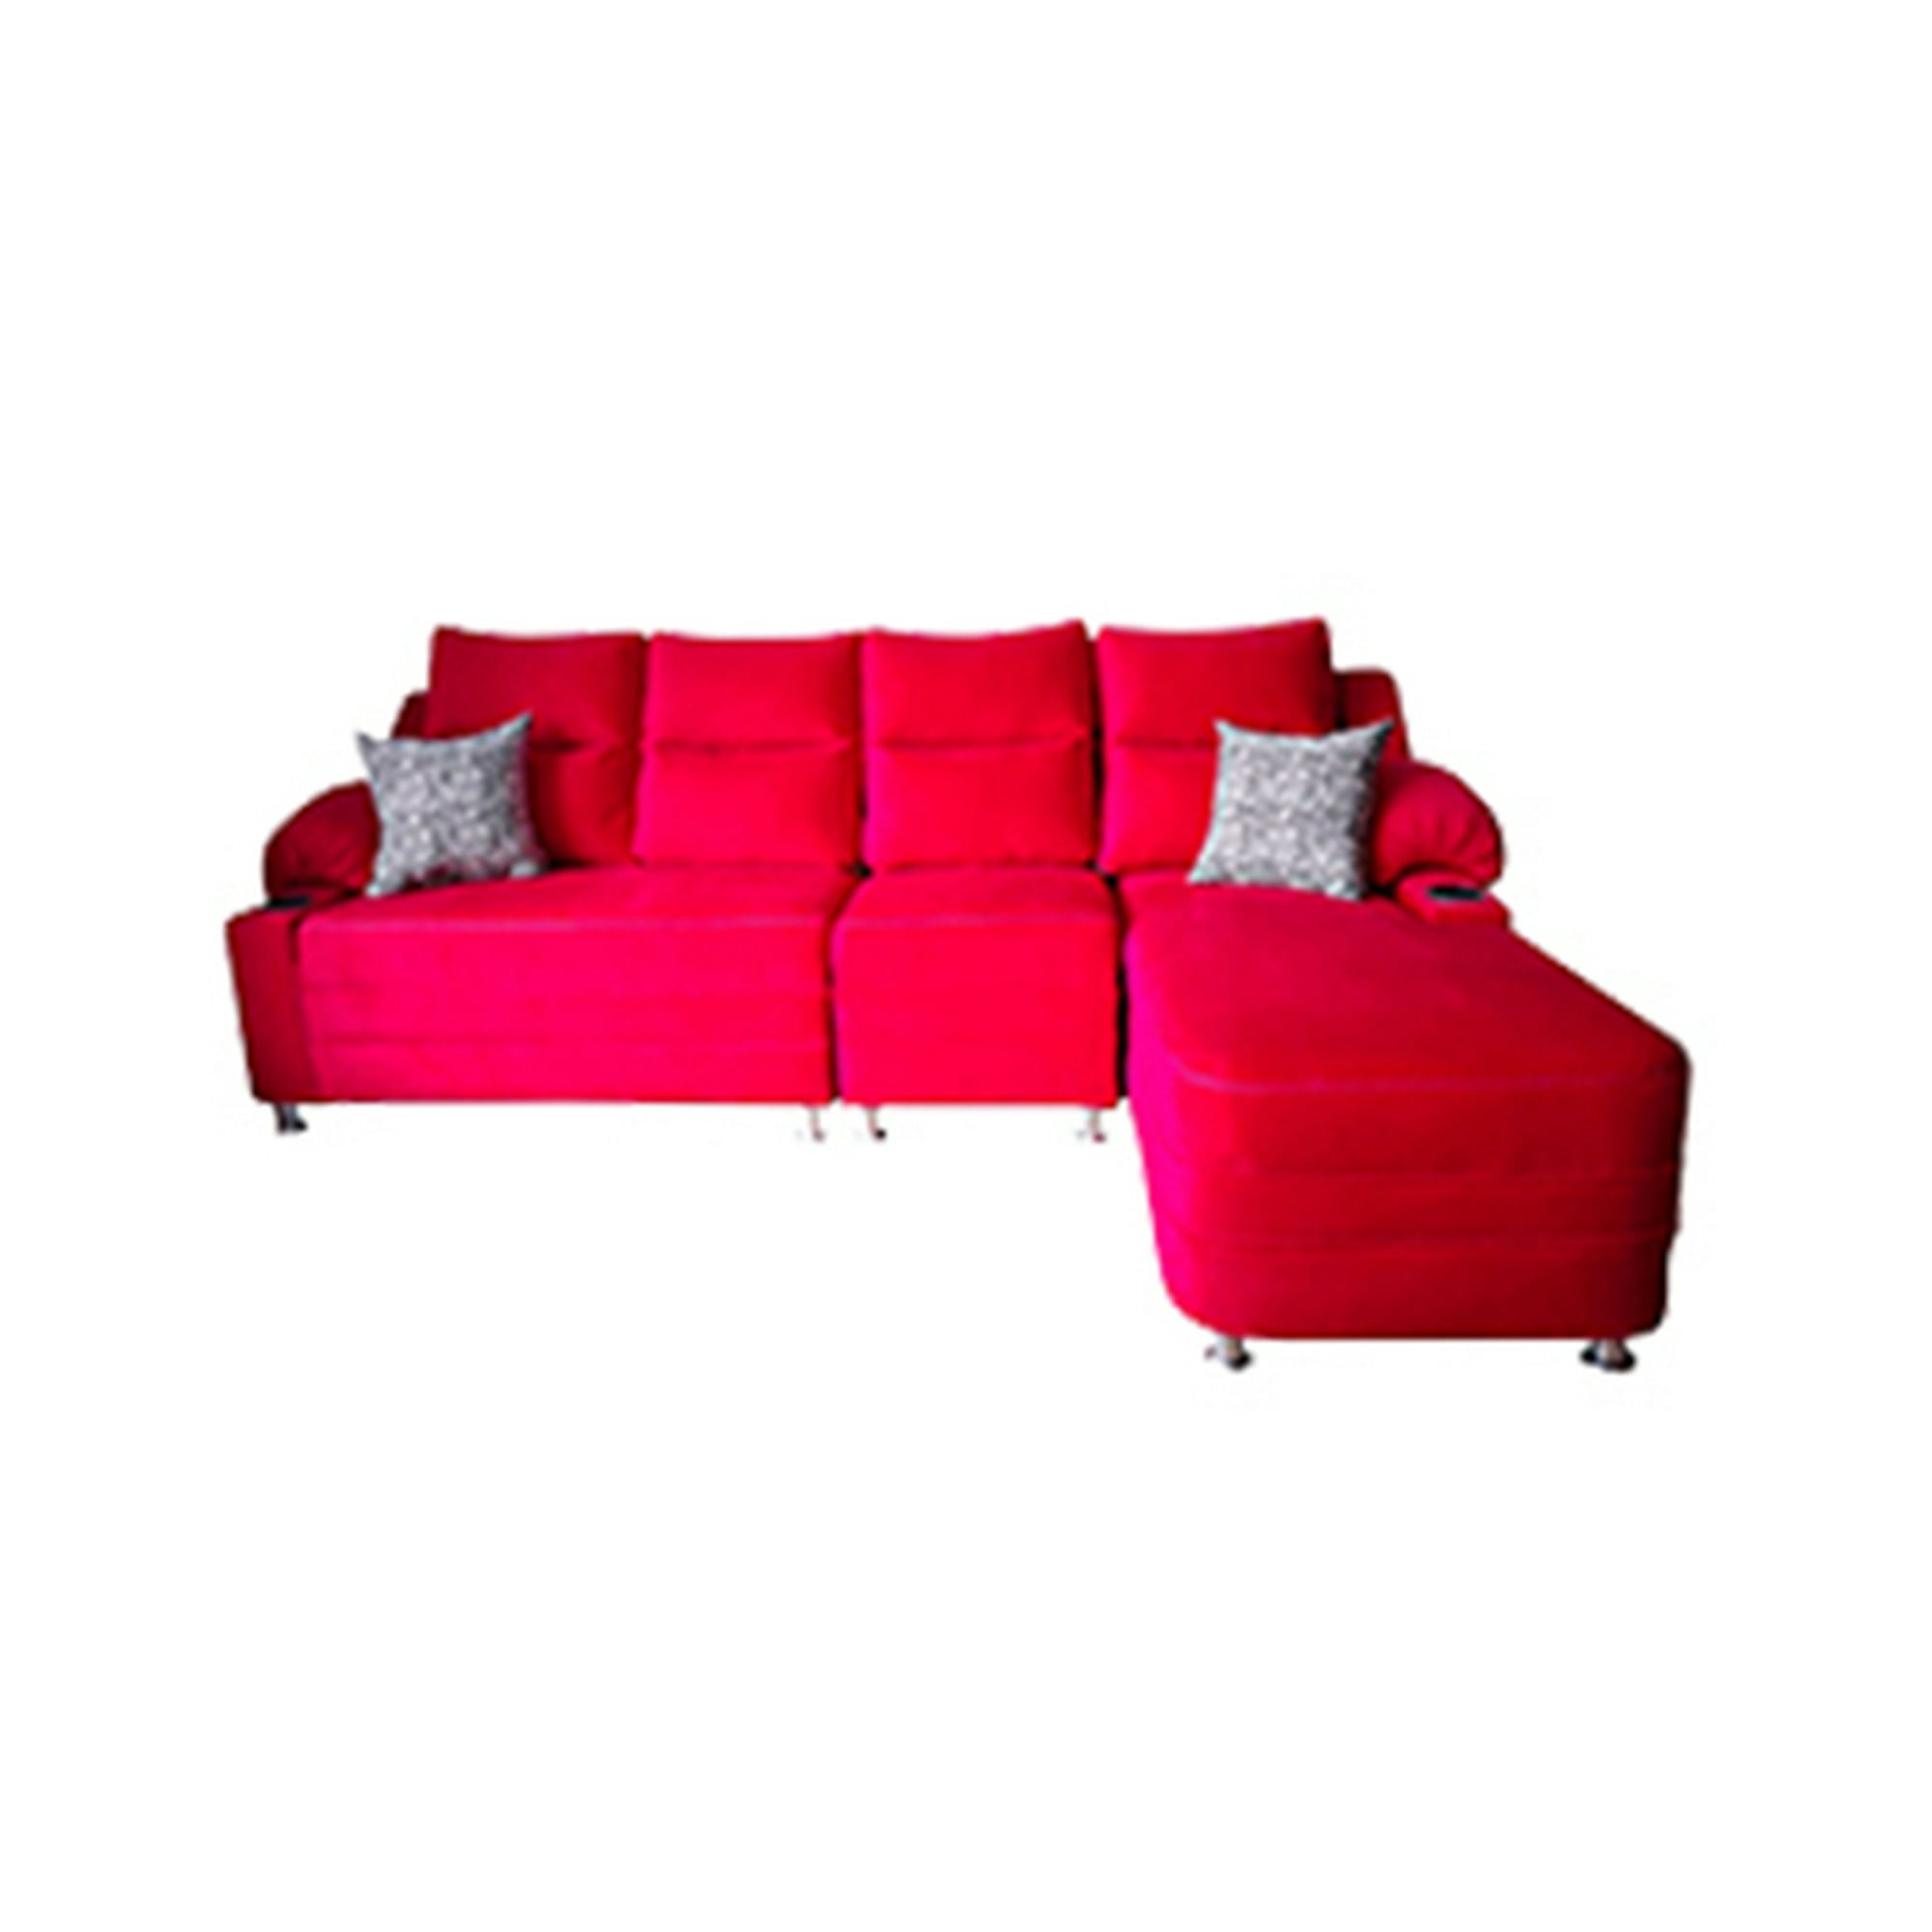 Sala esquinera comoda moderna arizona roja r21 r21 muebles arizona modeno esquinera